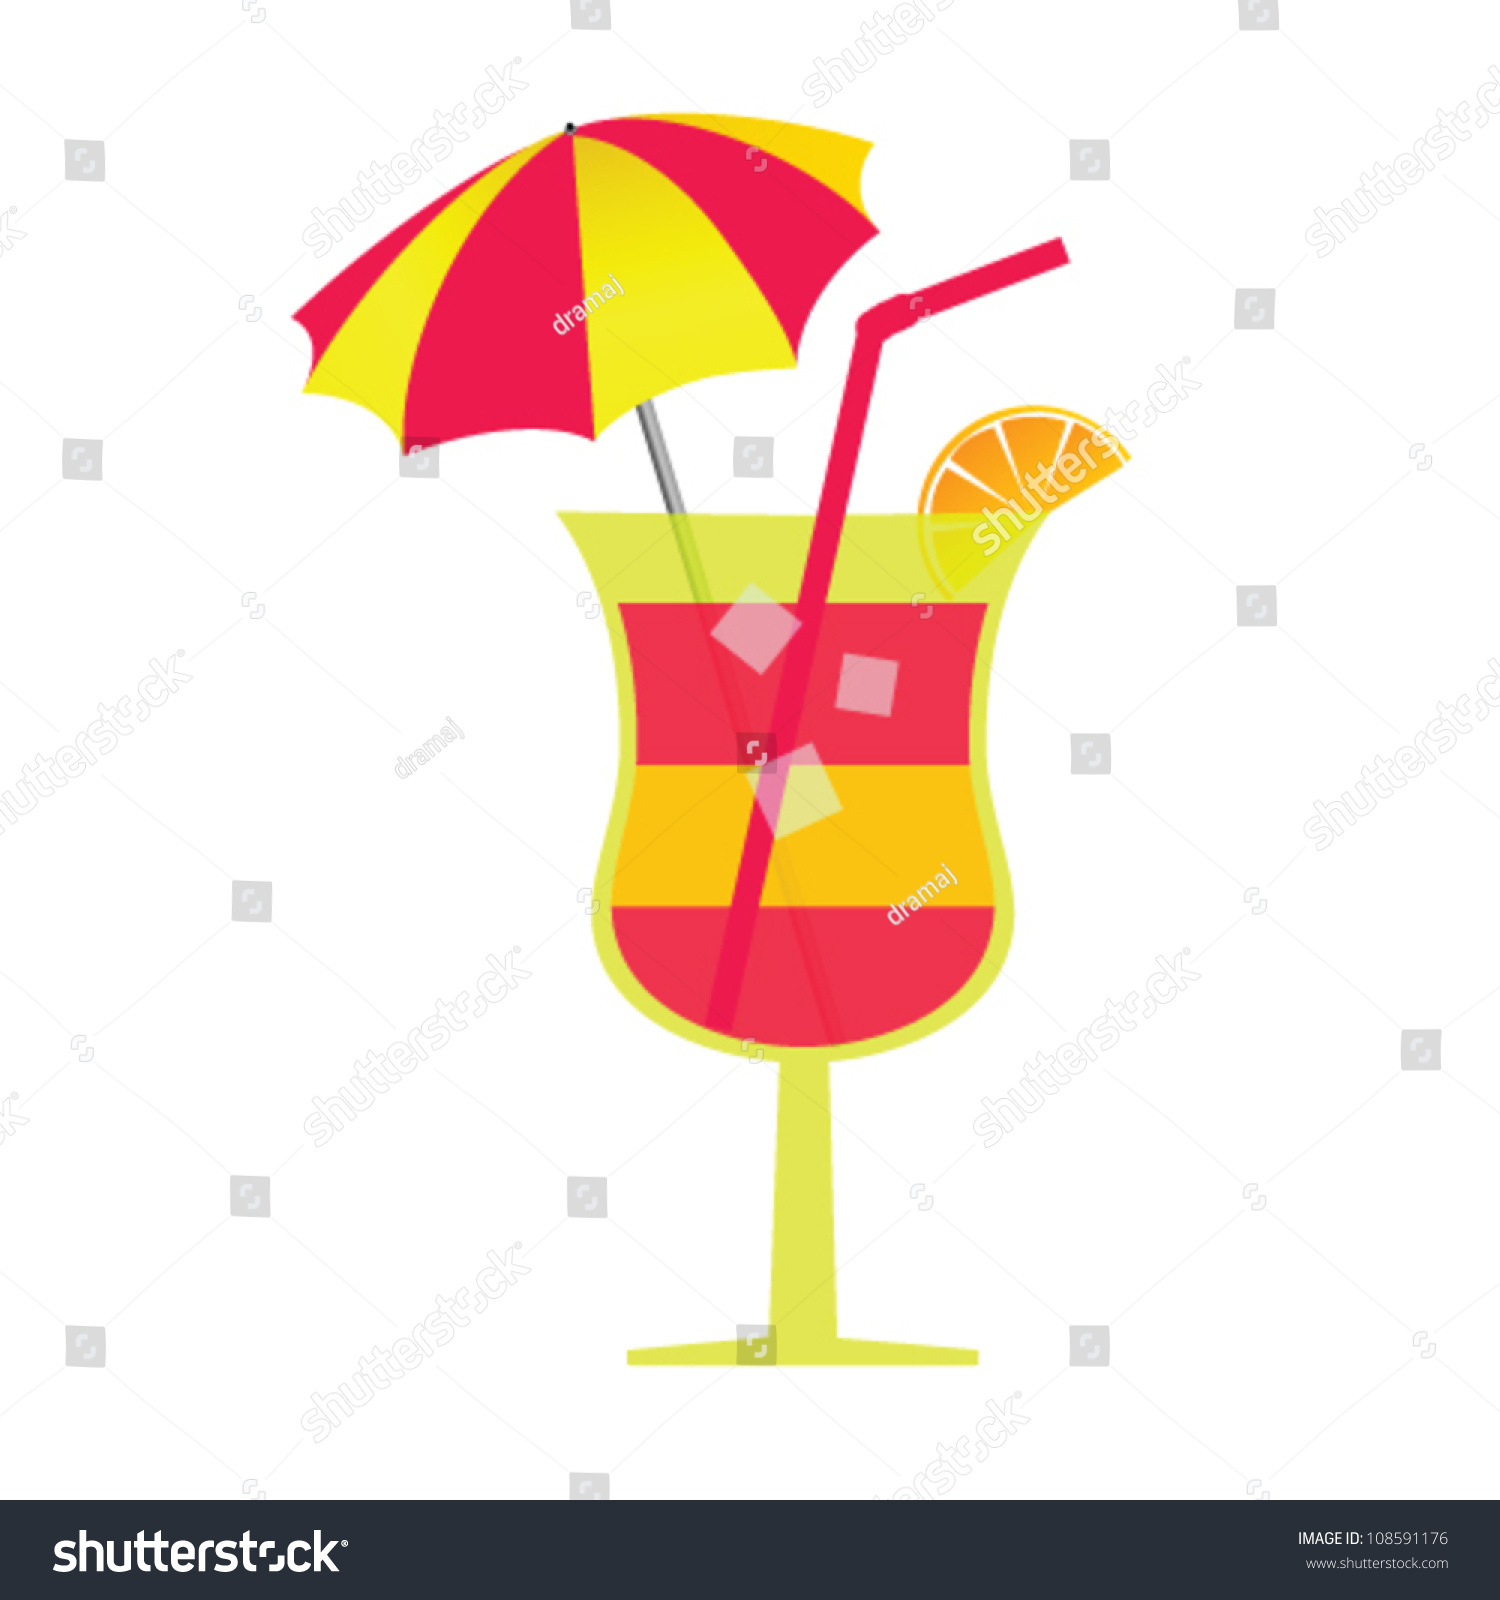 clipart cocktail umbrella - photo #16